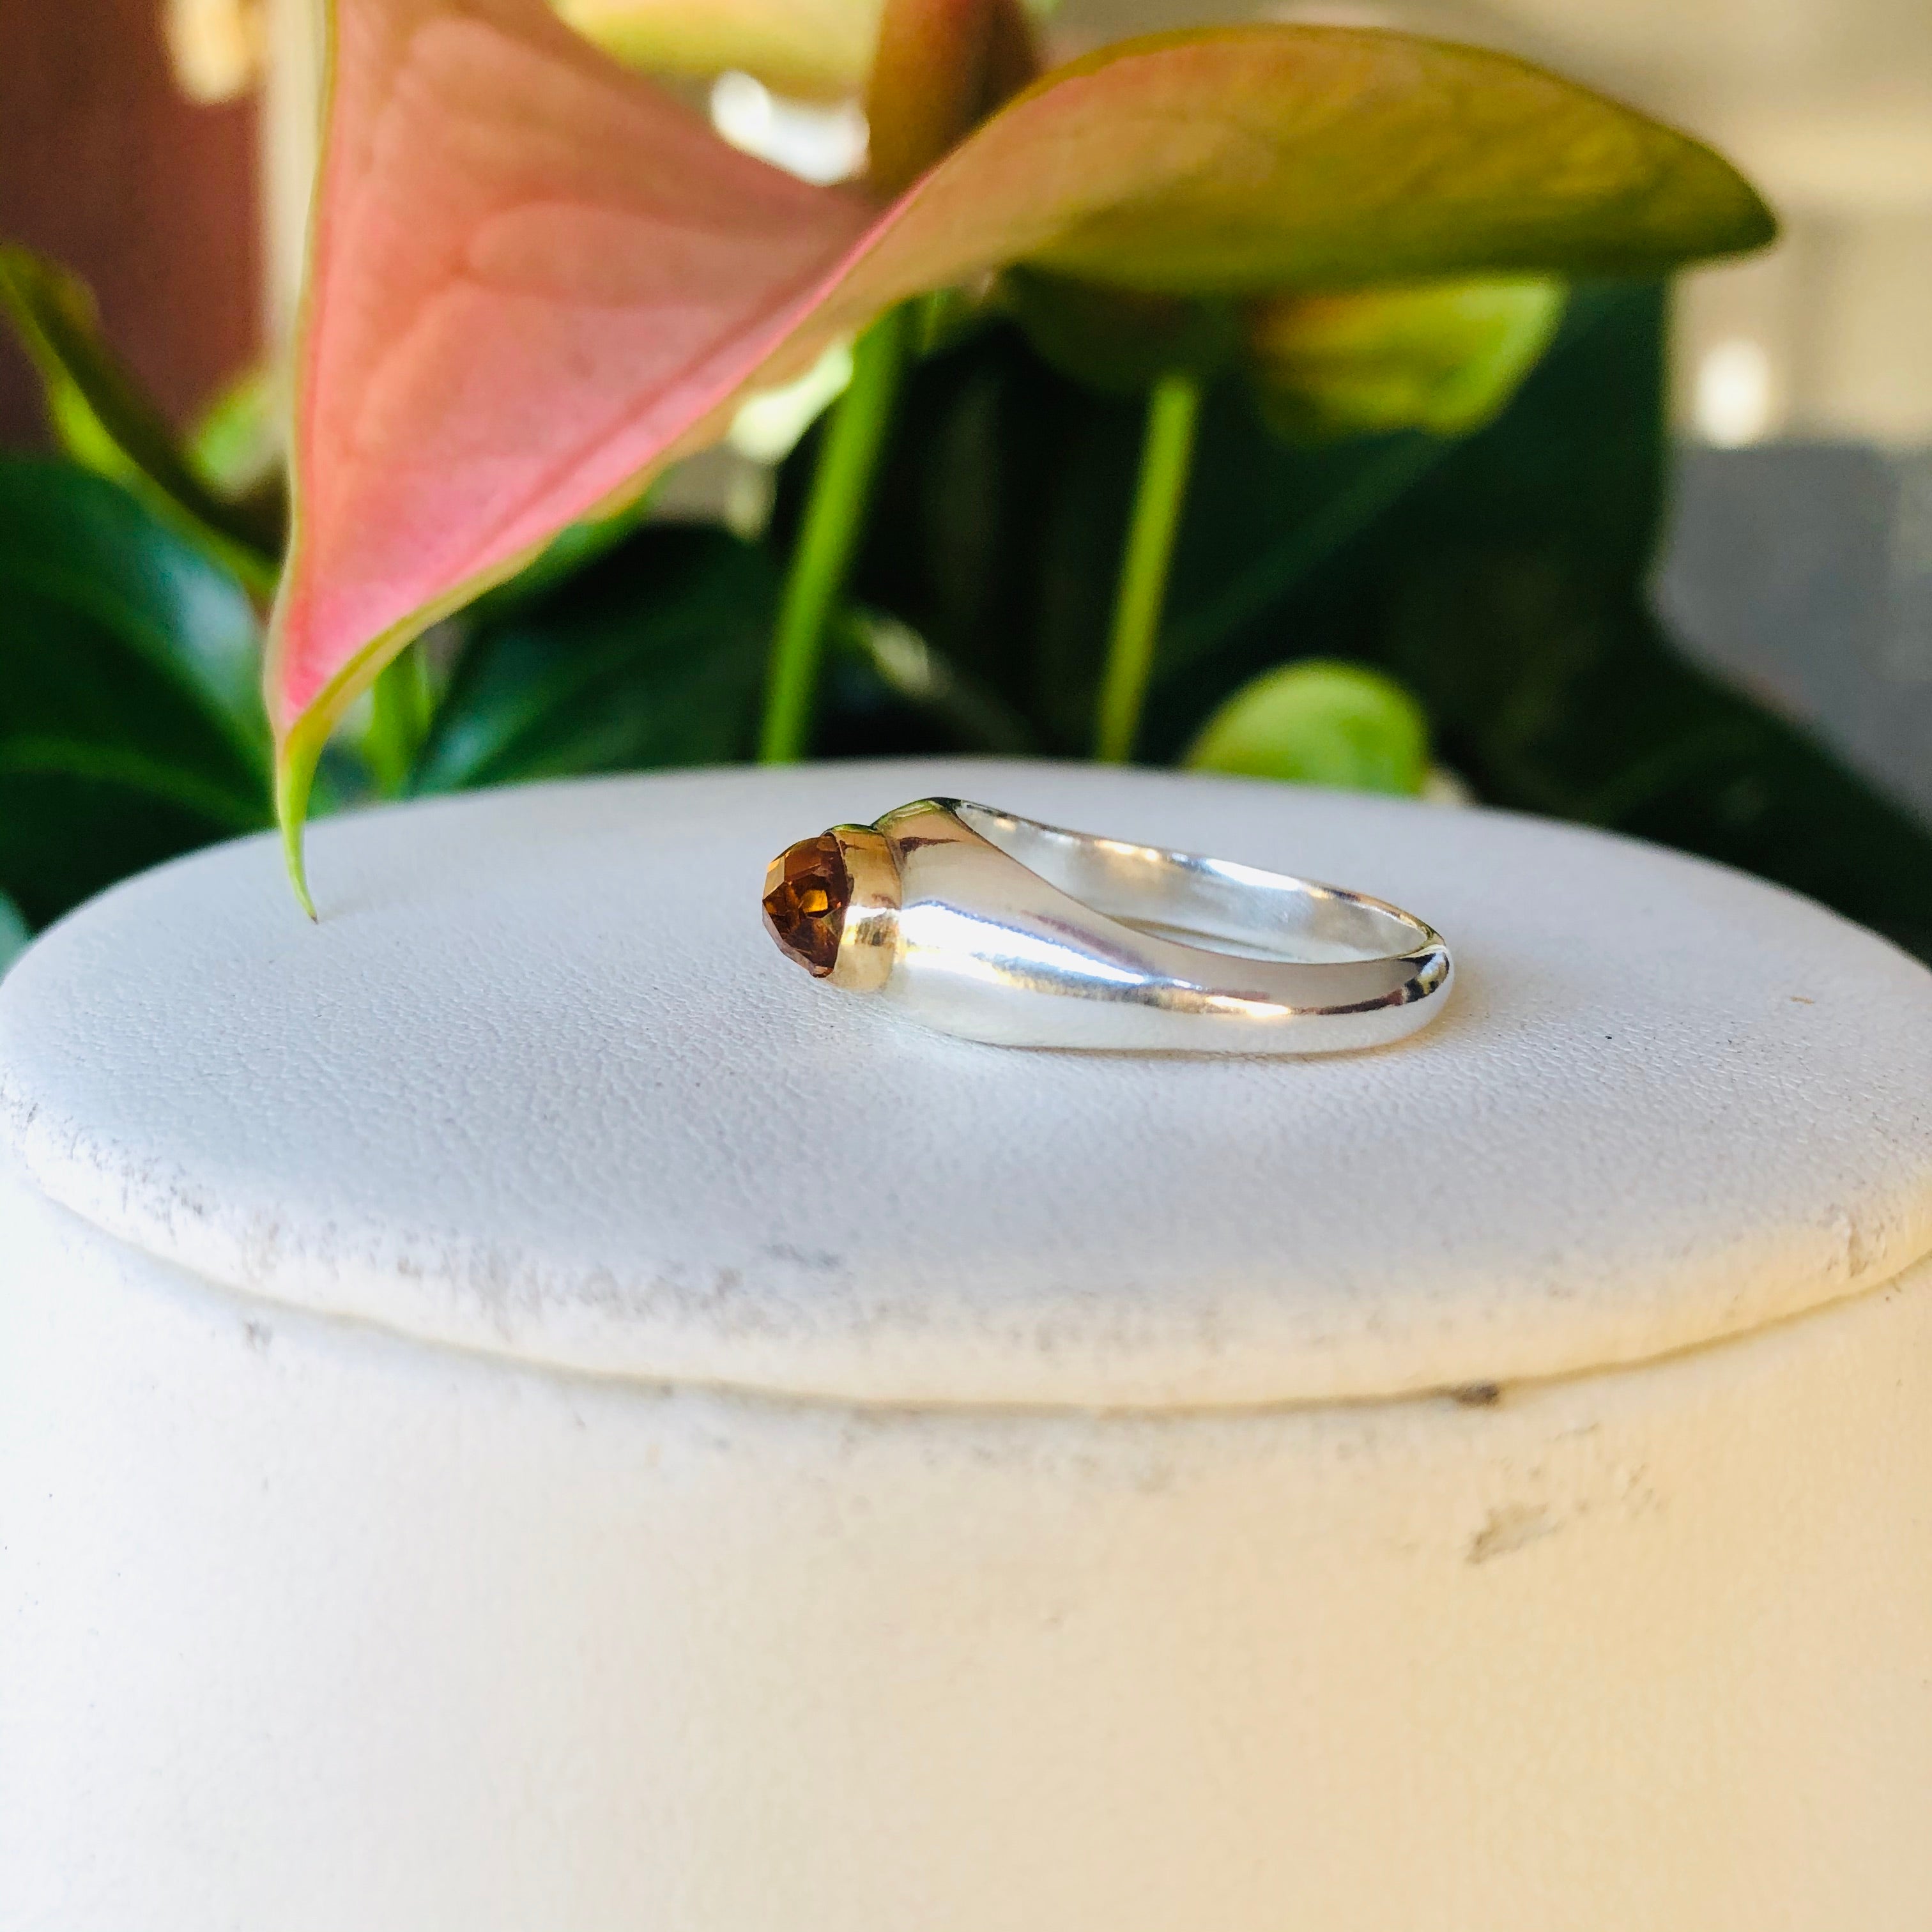 Oblong two toned bezel ring with citrine-serena kojimoto studio